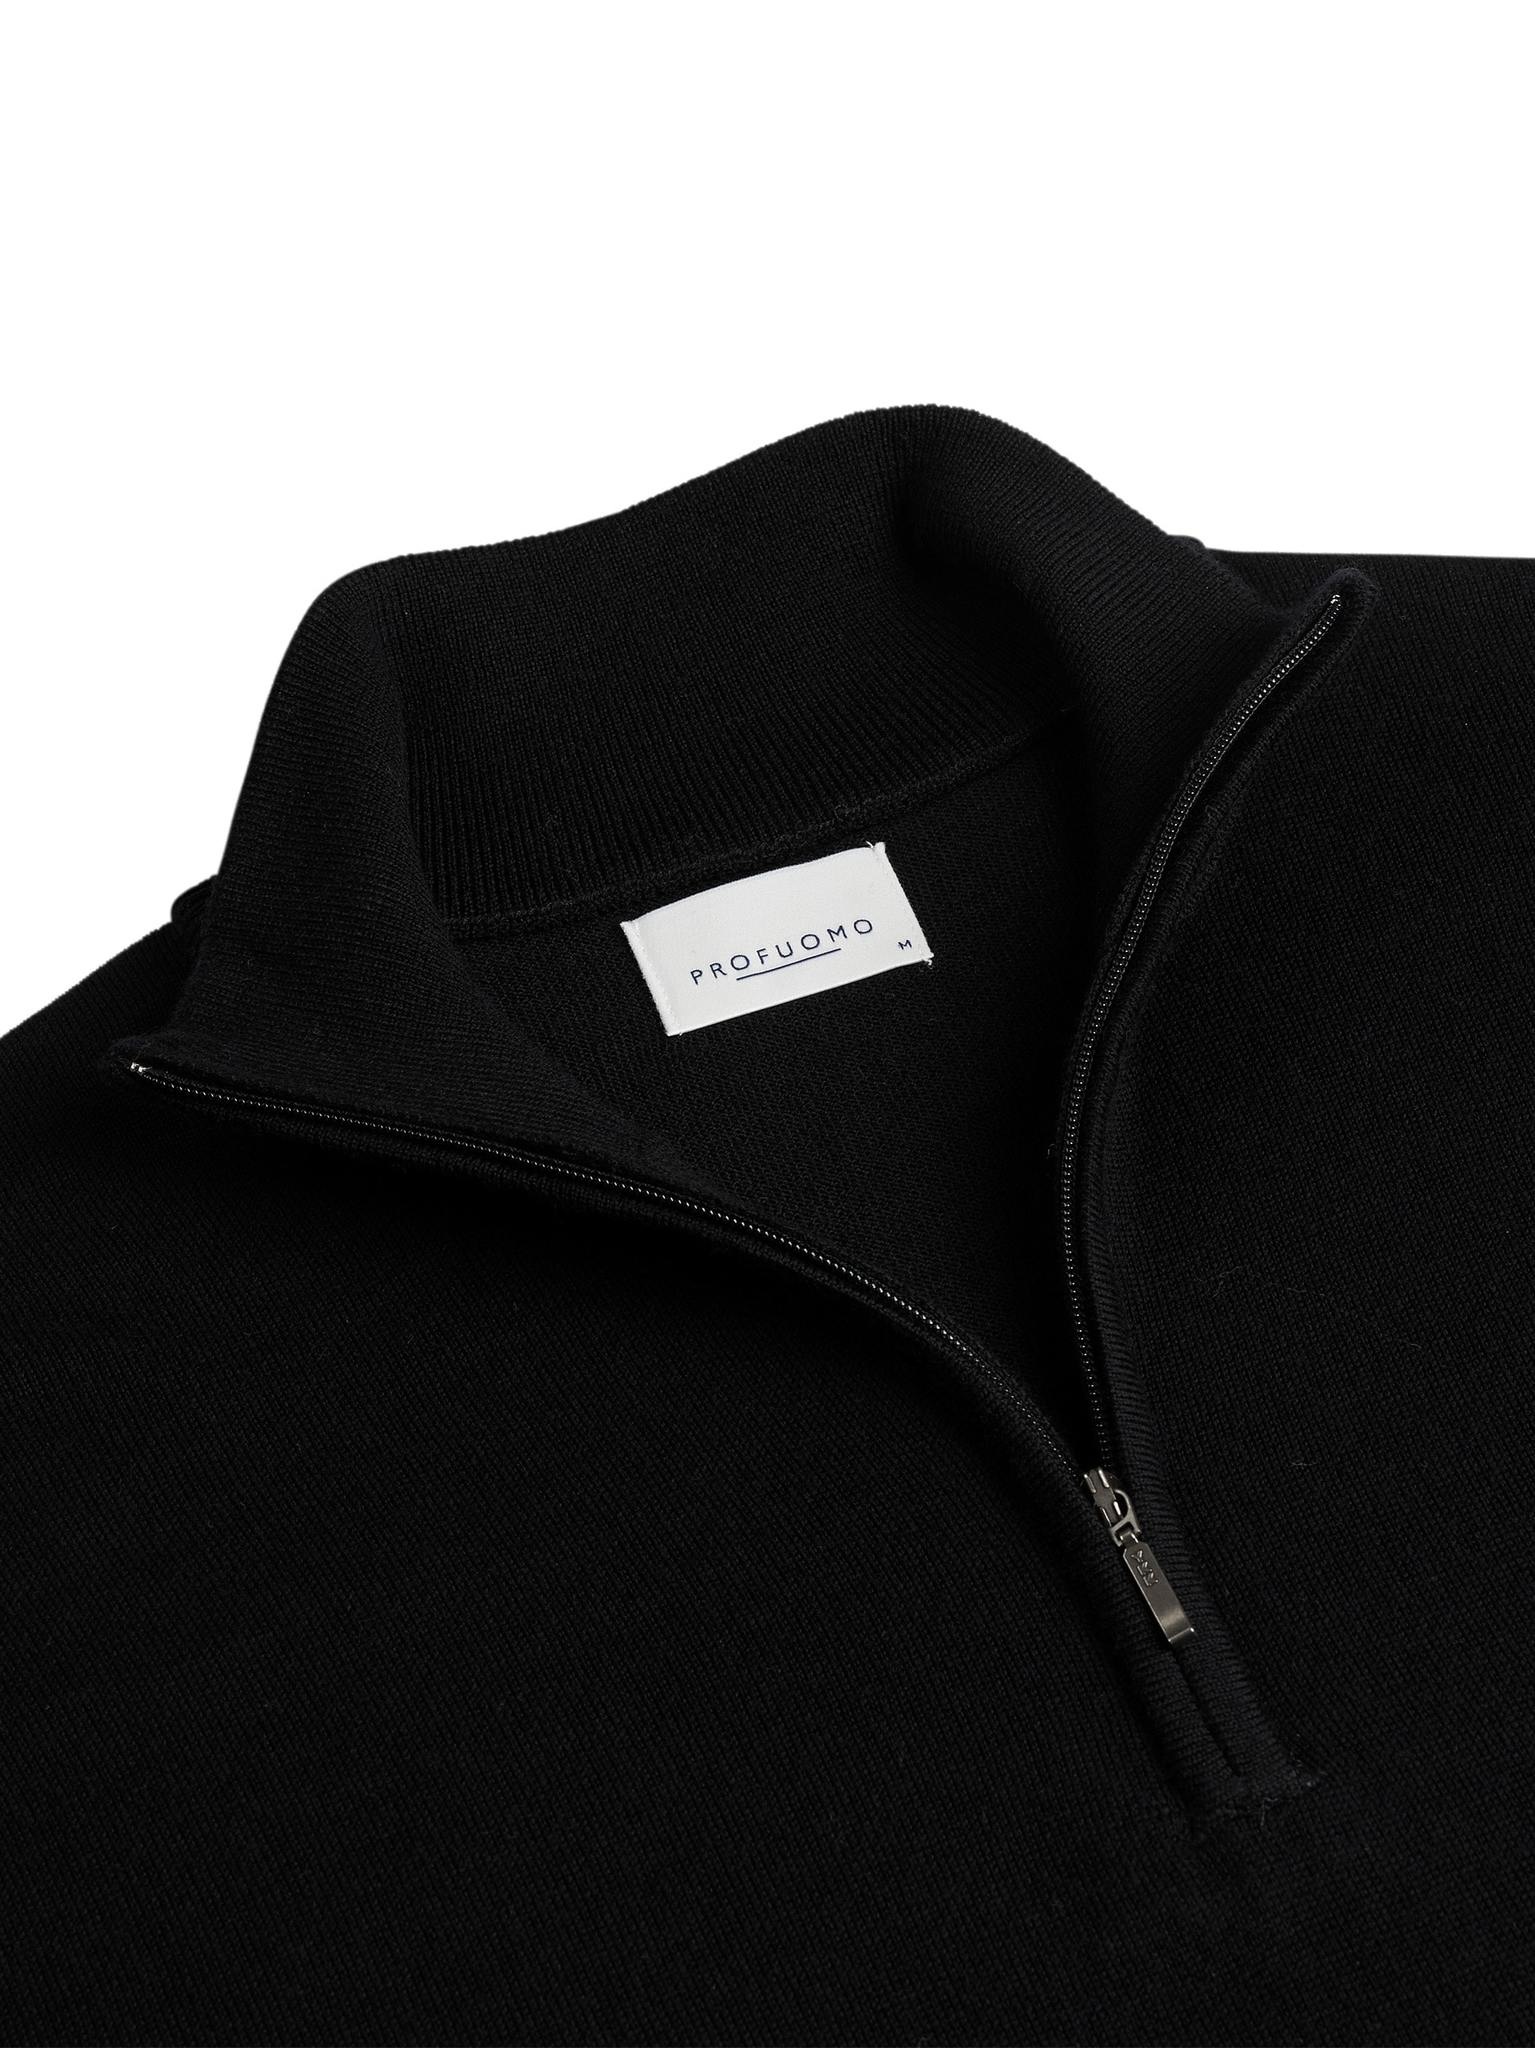 Profuomo Merino Half-Zip Pullover Black   XL Profuomo